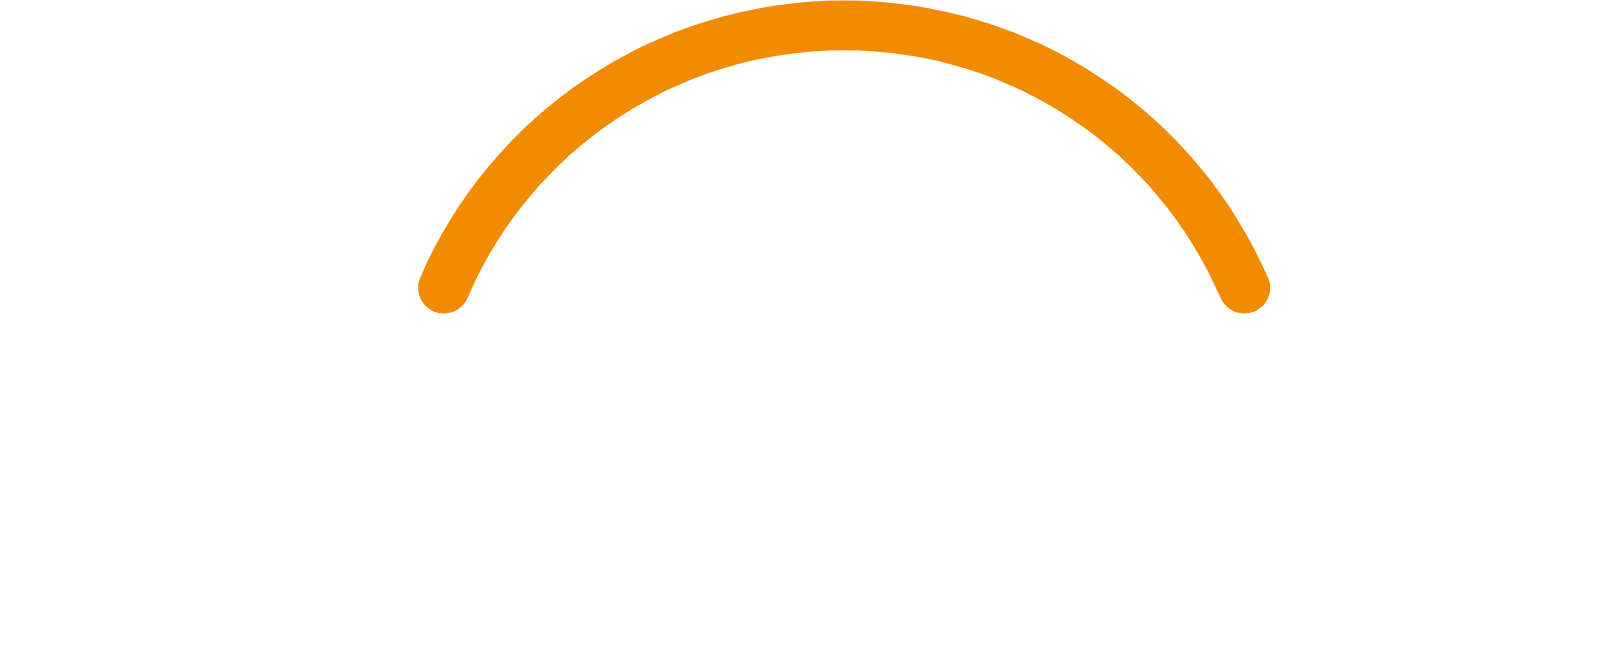 Workday logo large for dark backgrounds (transparent PNG)